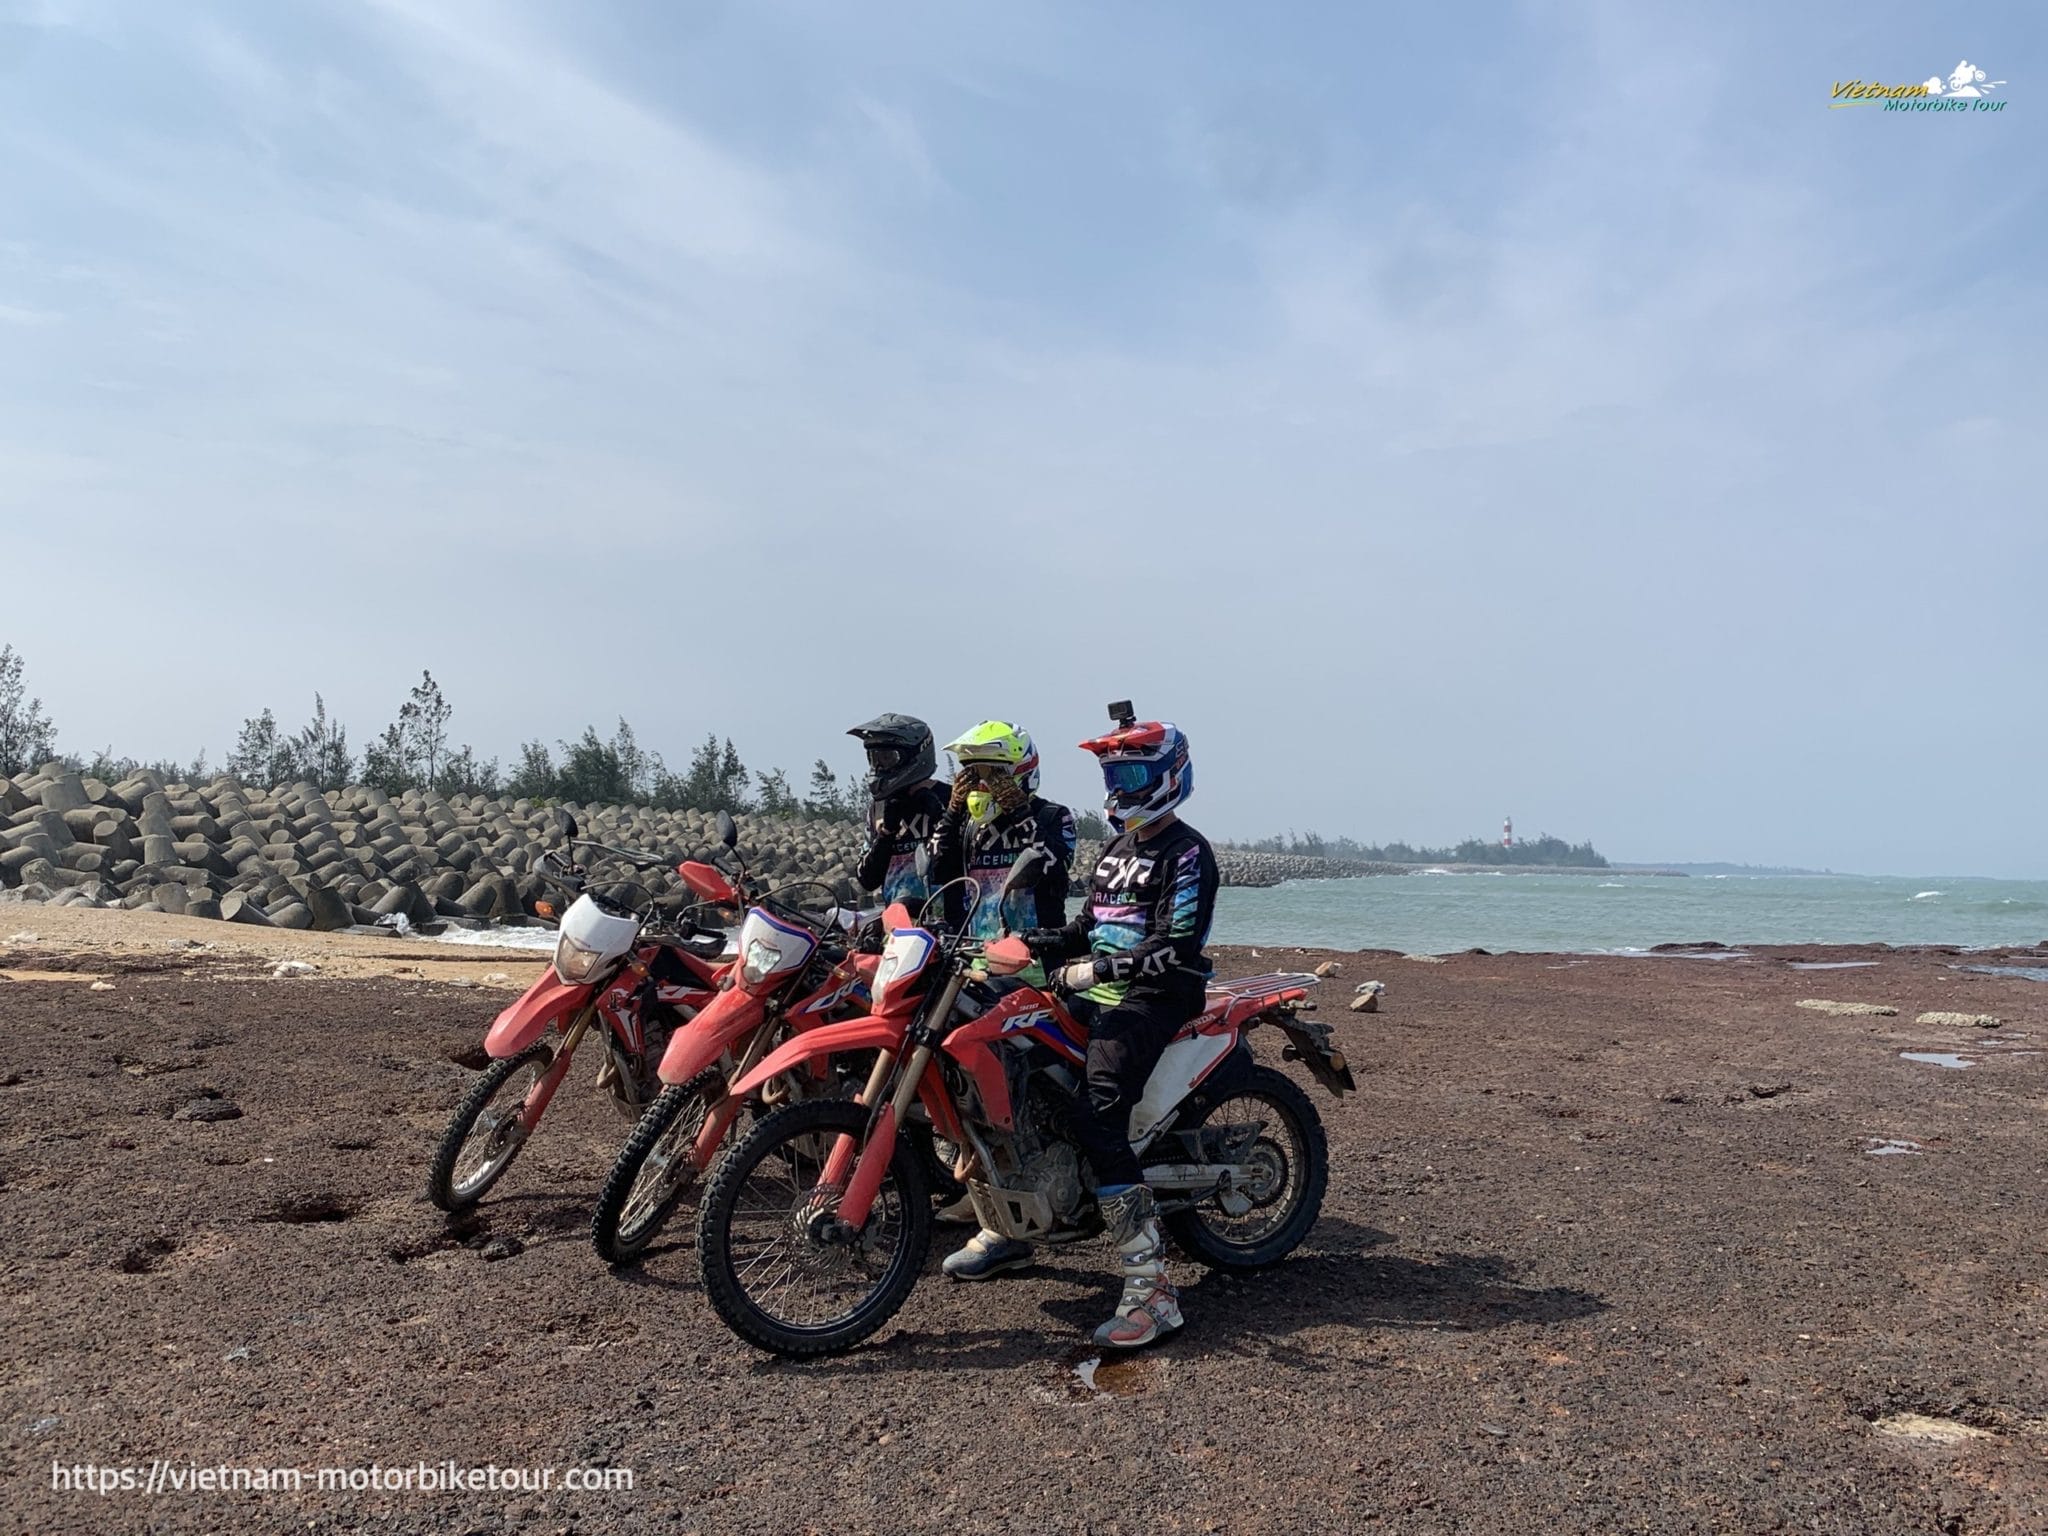 Motorcycle Tour to Quy Nhon